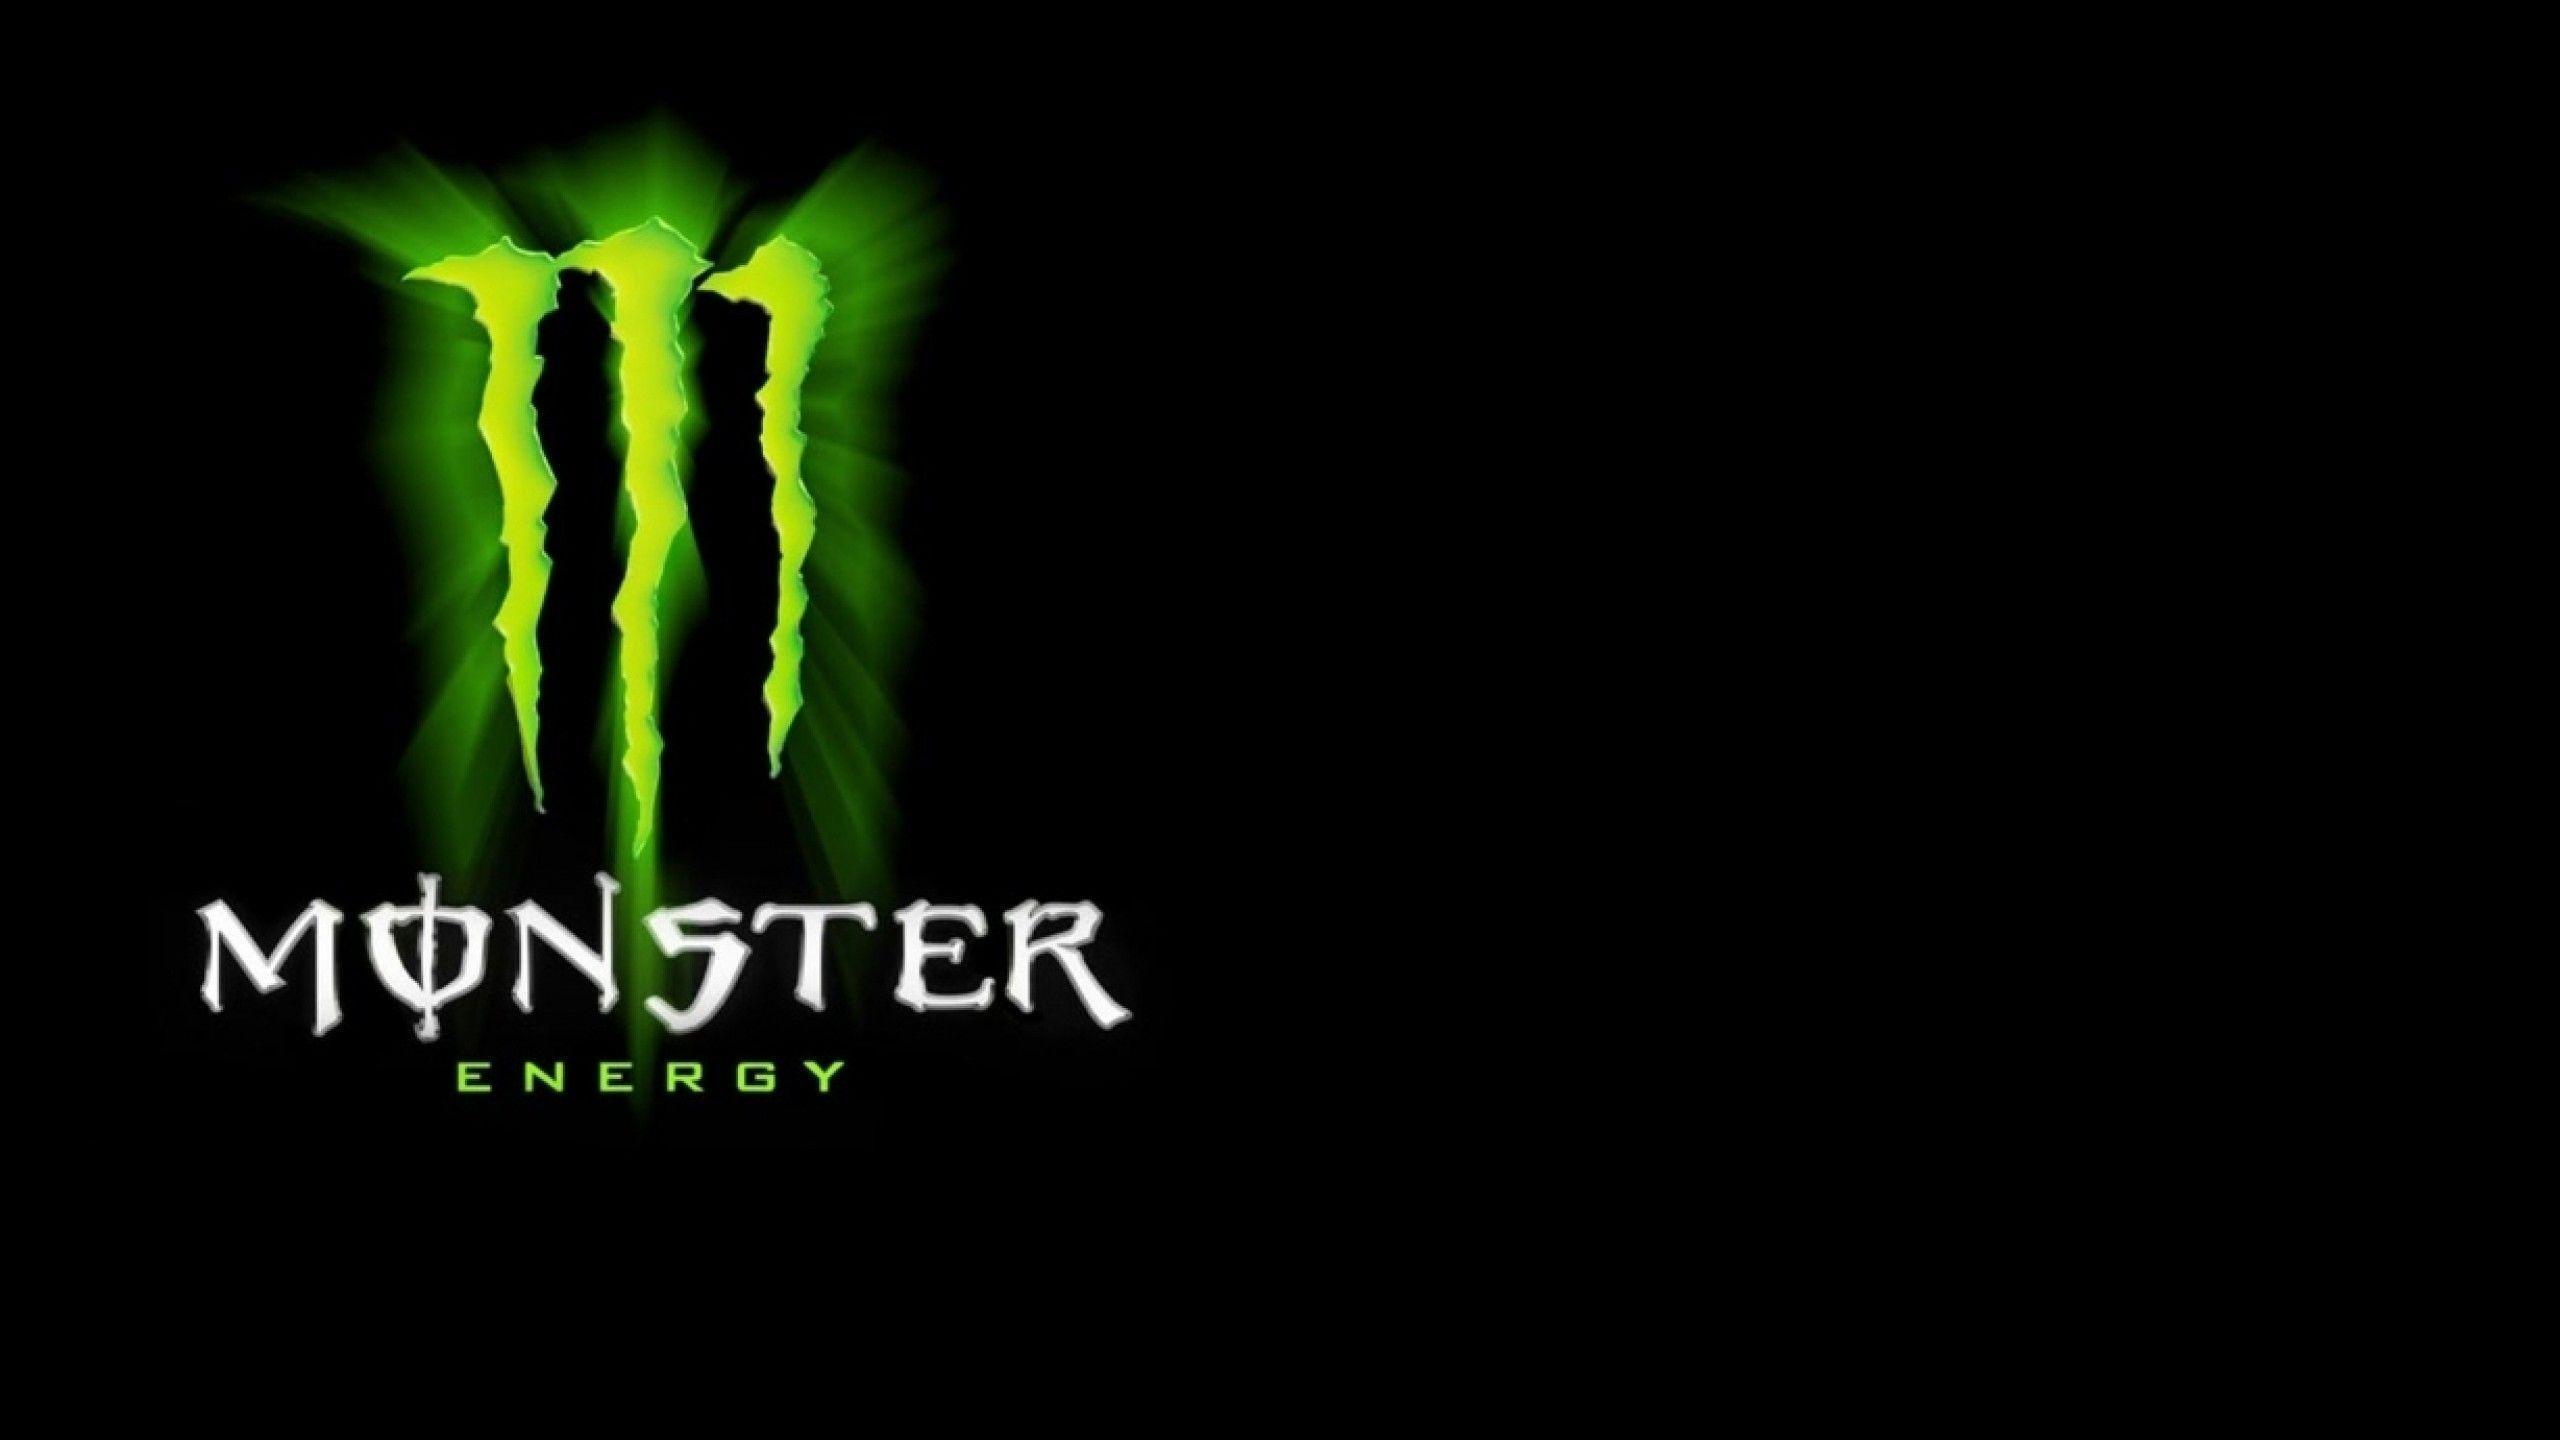 Monster energy hd wallpapers